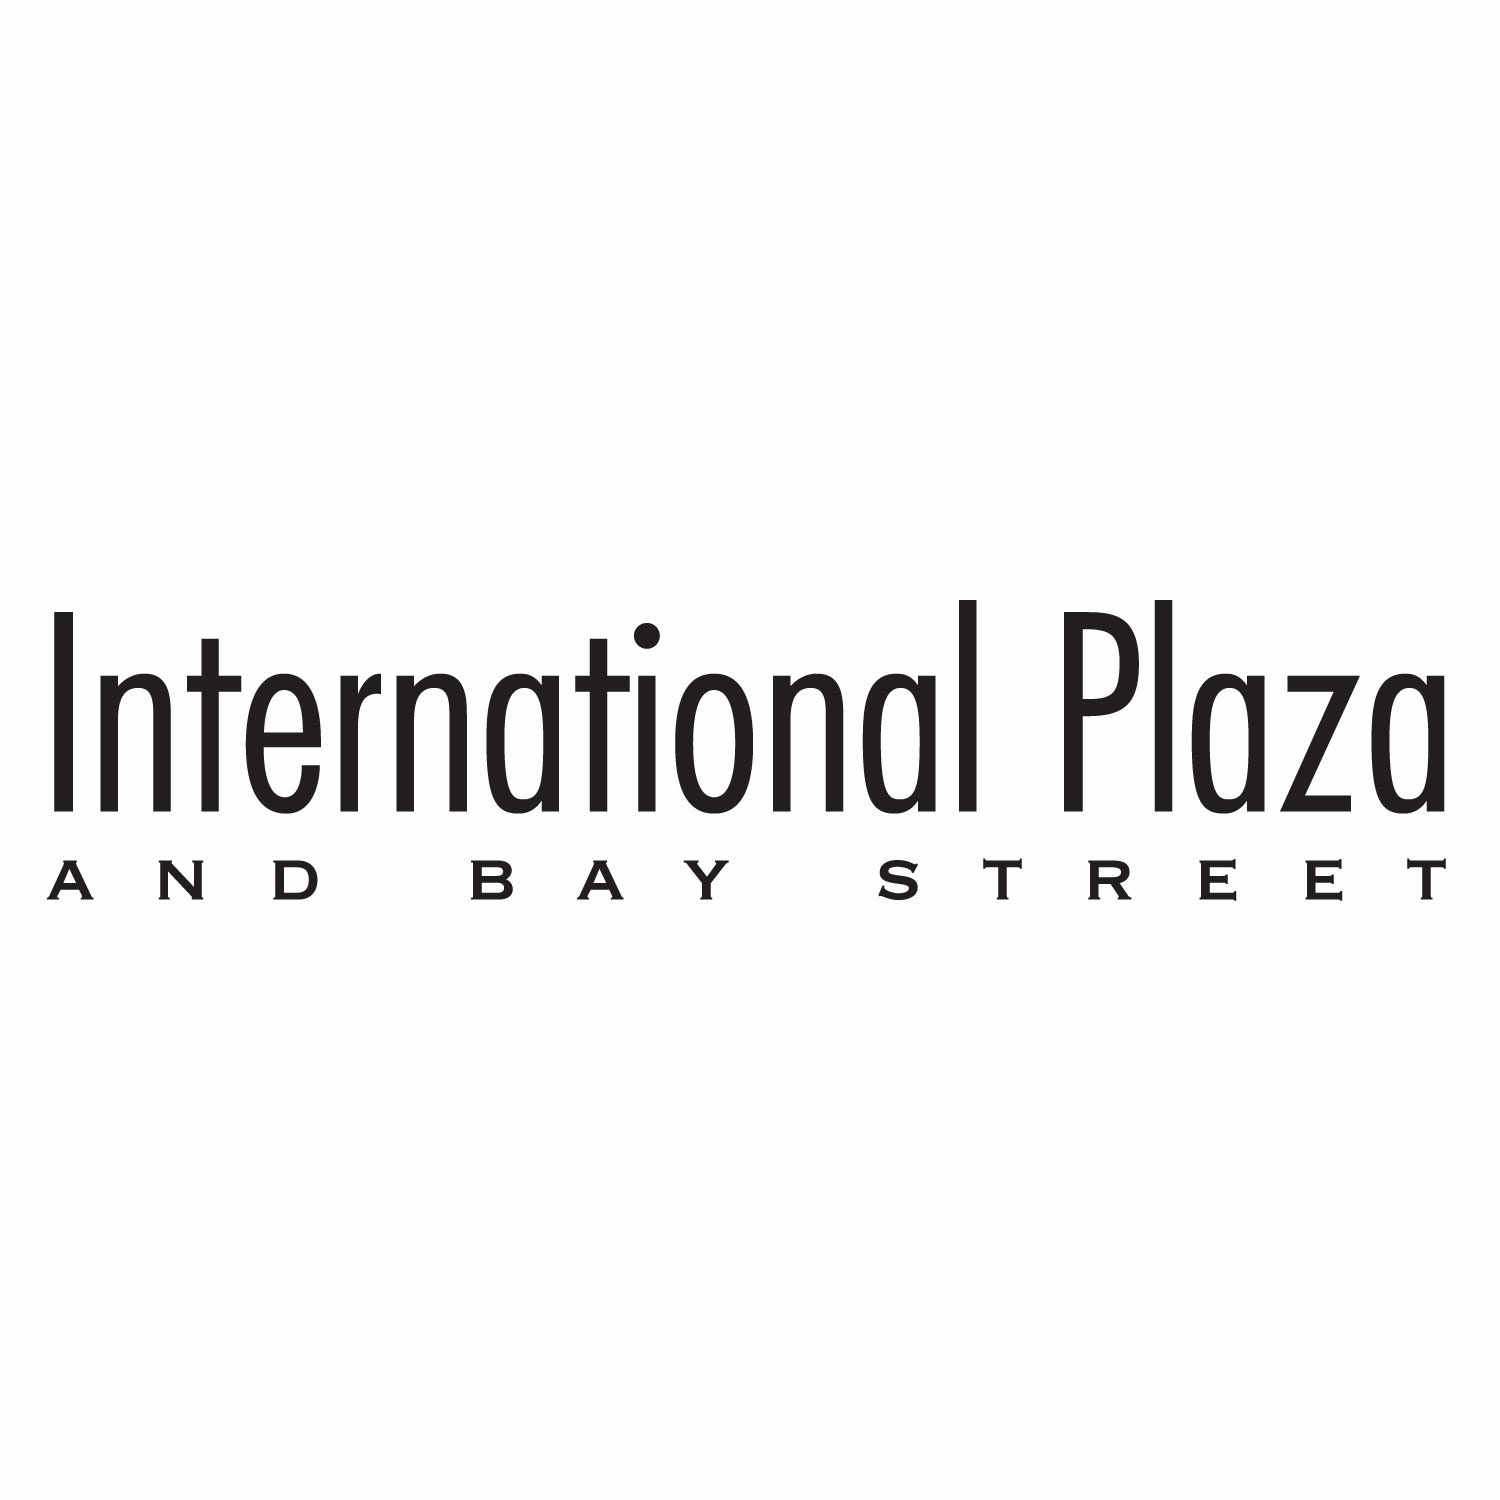 Tampaâ€™s International Plaza Mall adding new stores